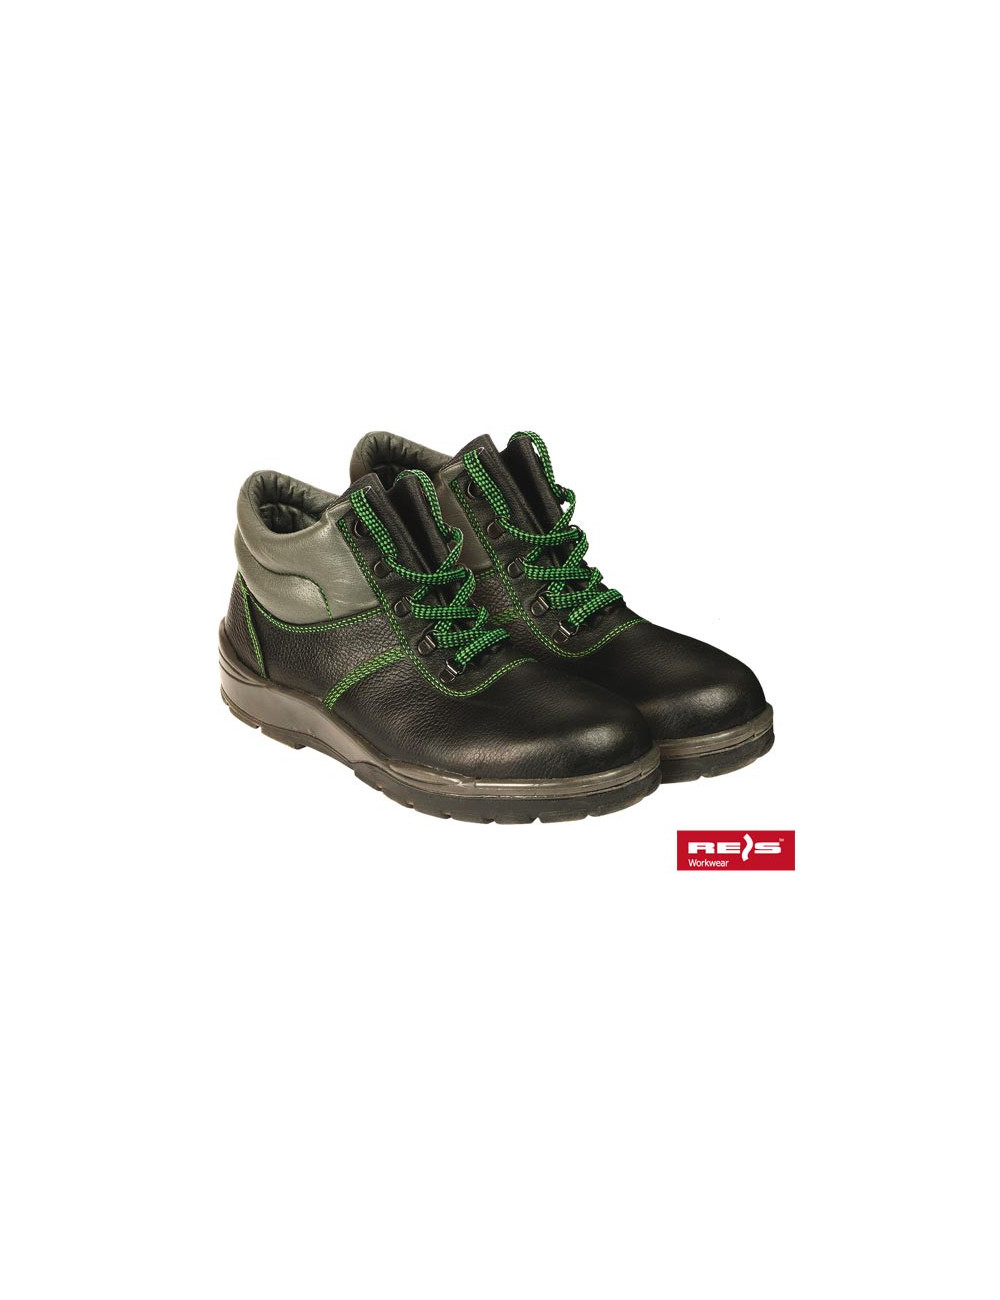 Safety shoes bsz black-grey-green Reis Brtopreis